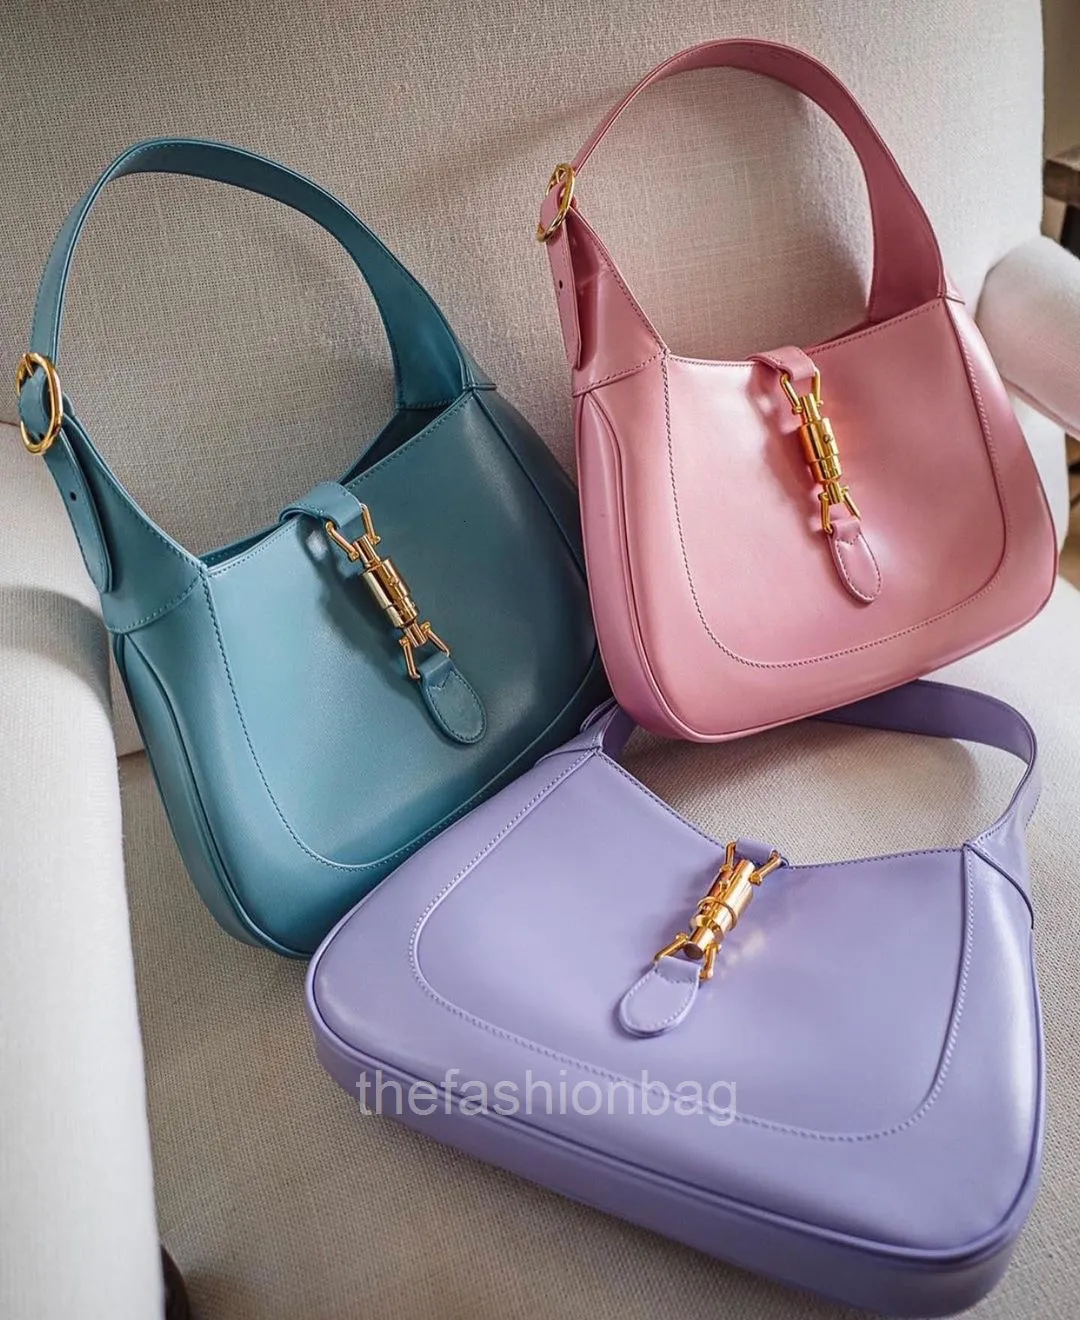 الأكياس المسائية Top G Jackie 1961 مصمم One Houtgher Women Fashion Nylon Leather Bag Pointlics Handbags Women's Wallets